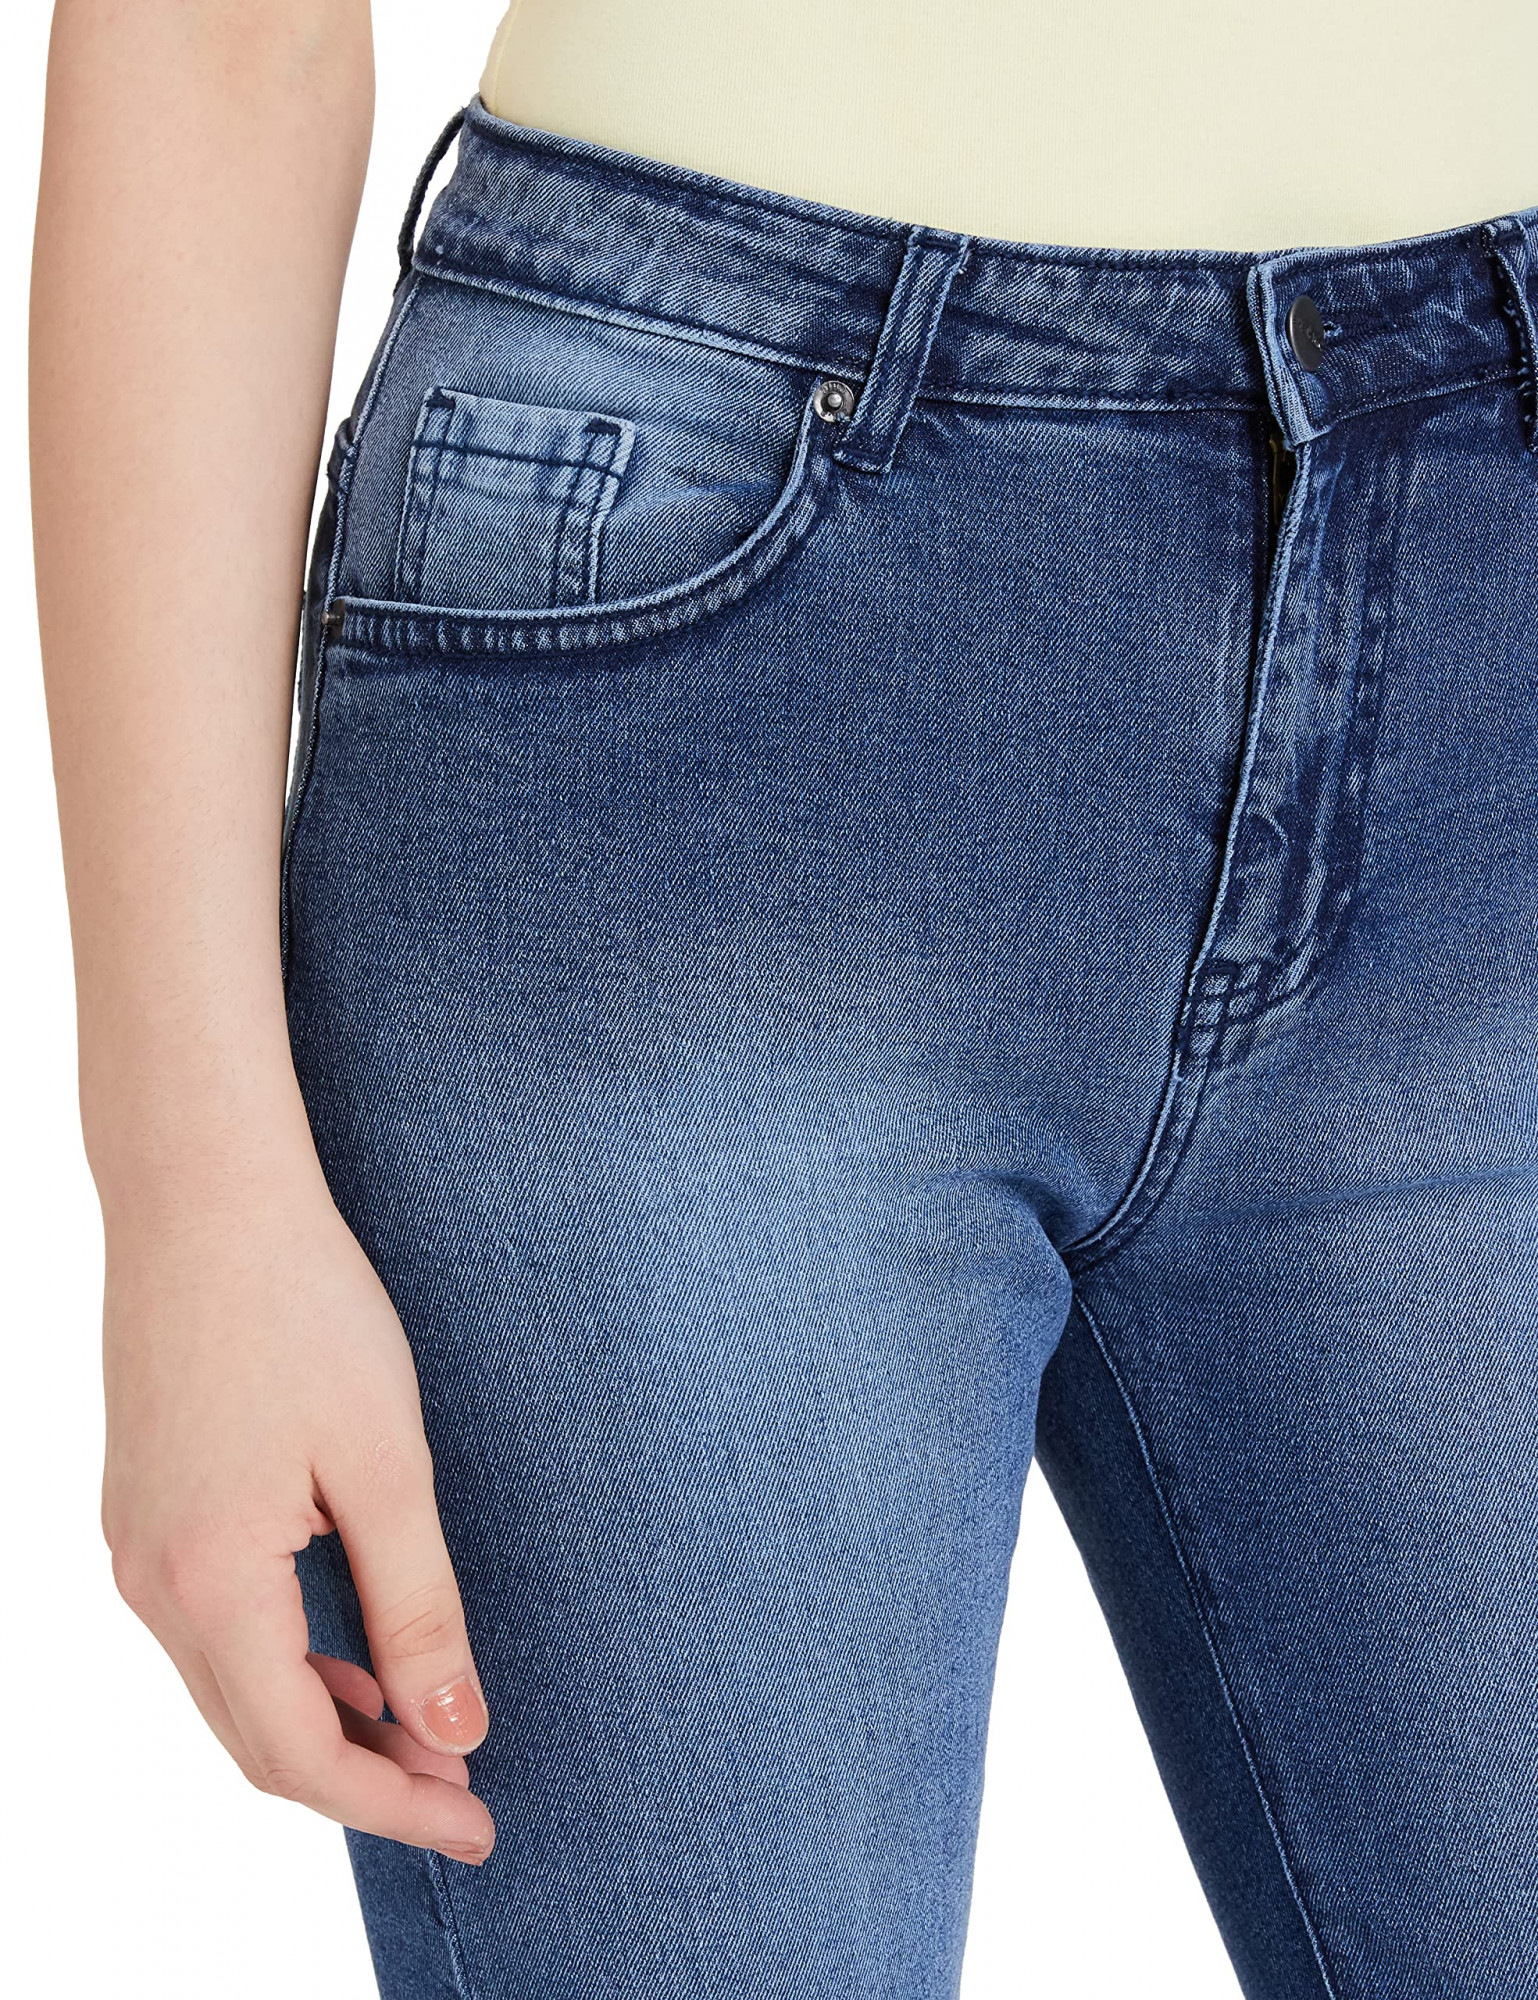 Buy Women Boyfriends Jeans High Waist Baggy Denim Pants Wide Leg Jeans  Loose fit Straight Jeans (28, Black) at Amazon.in